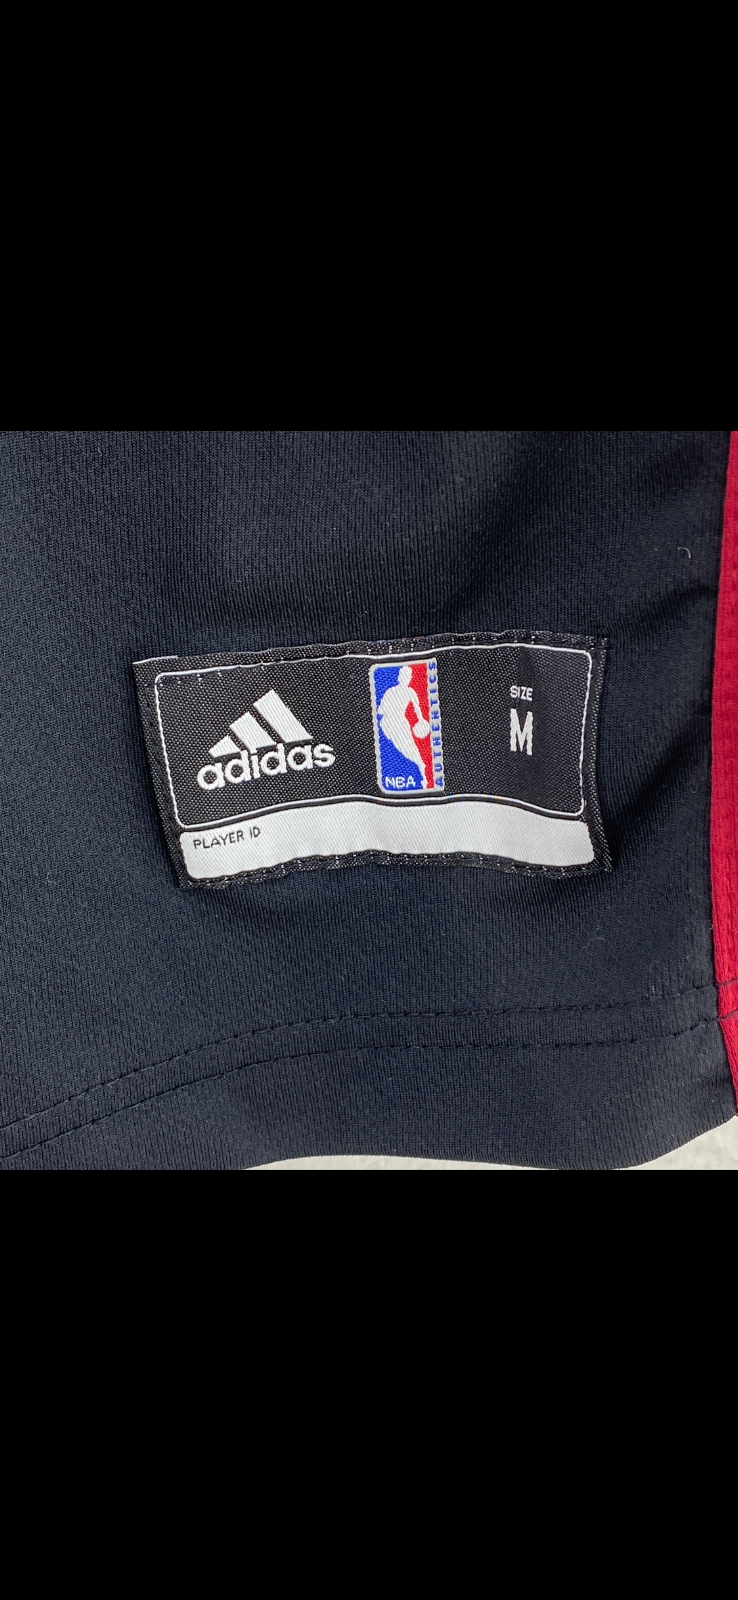 Vintage Adidas Miami Heat #3 Dwyane Wade NBA Black Jersey Size M V-Neck Kids